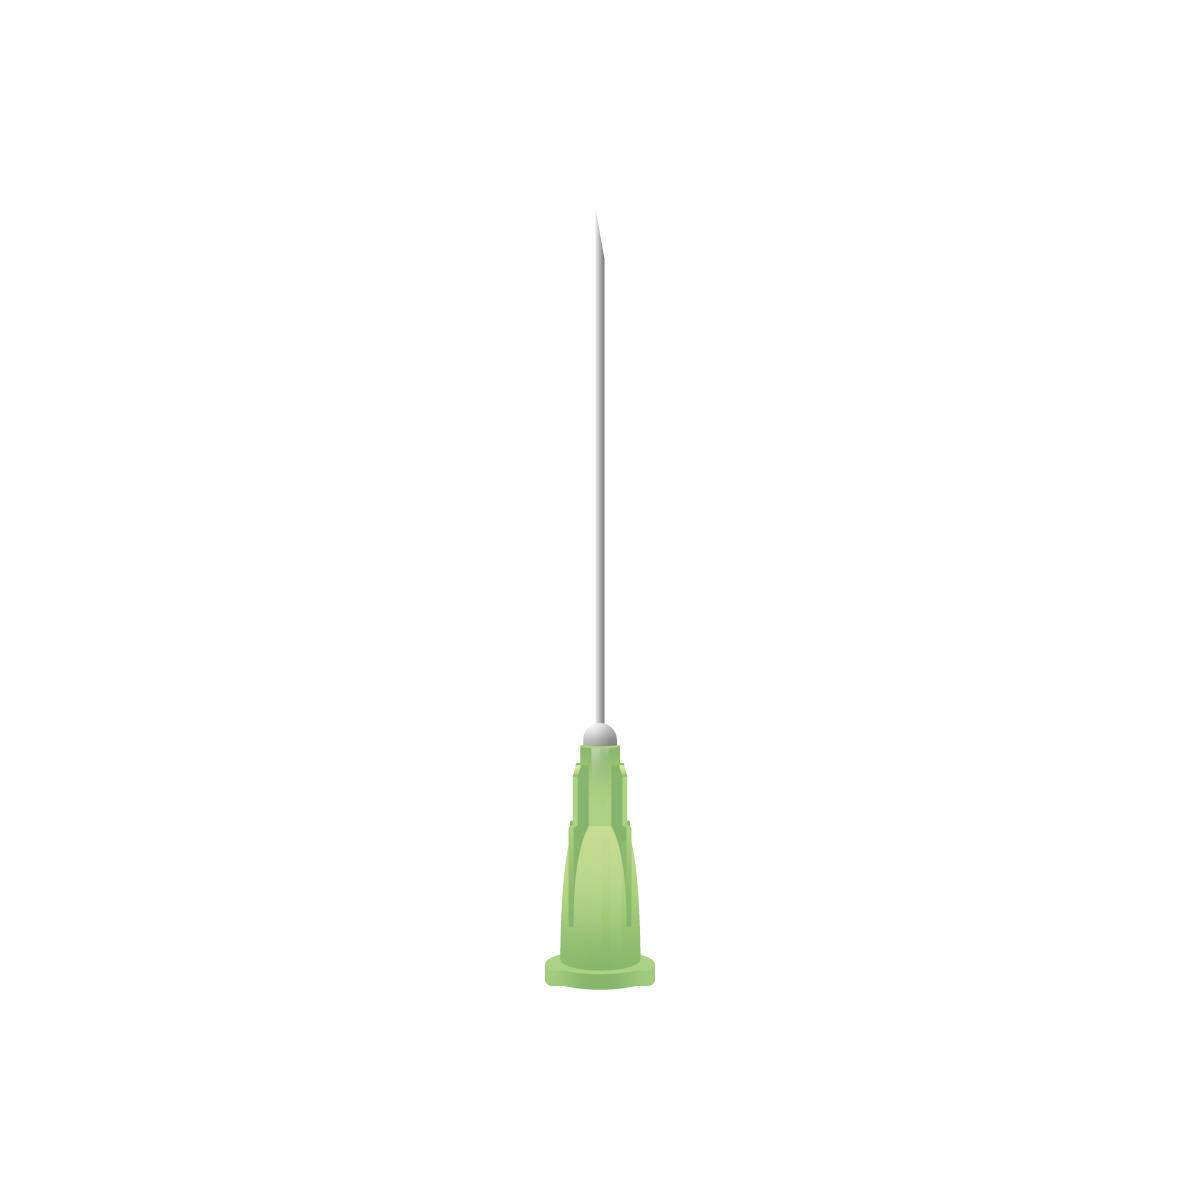 21g Green 1.5 inch BD Microlance Needles 304432 UKMEDI.CO.UK